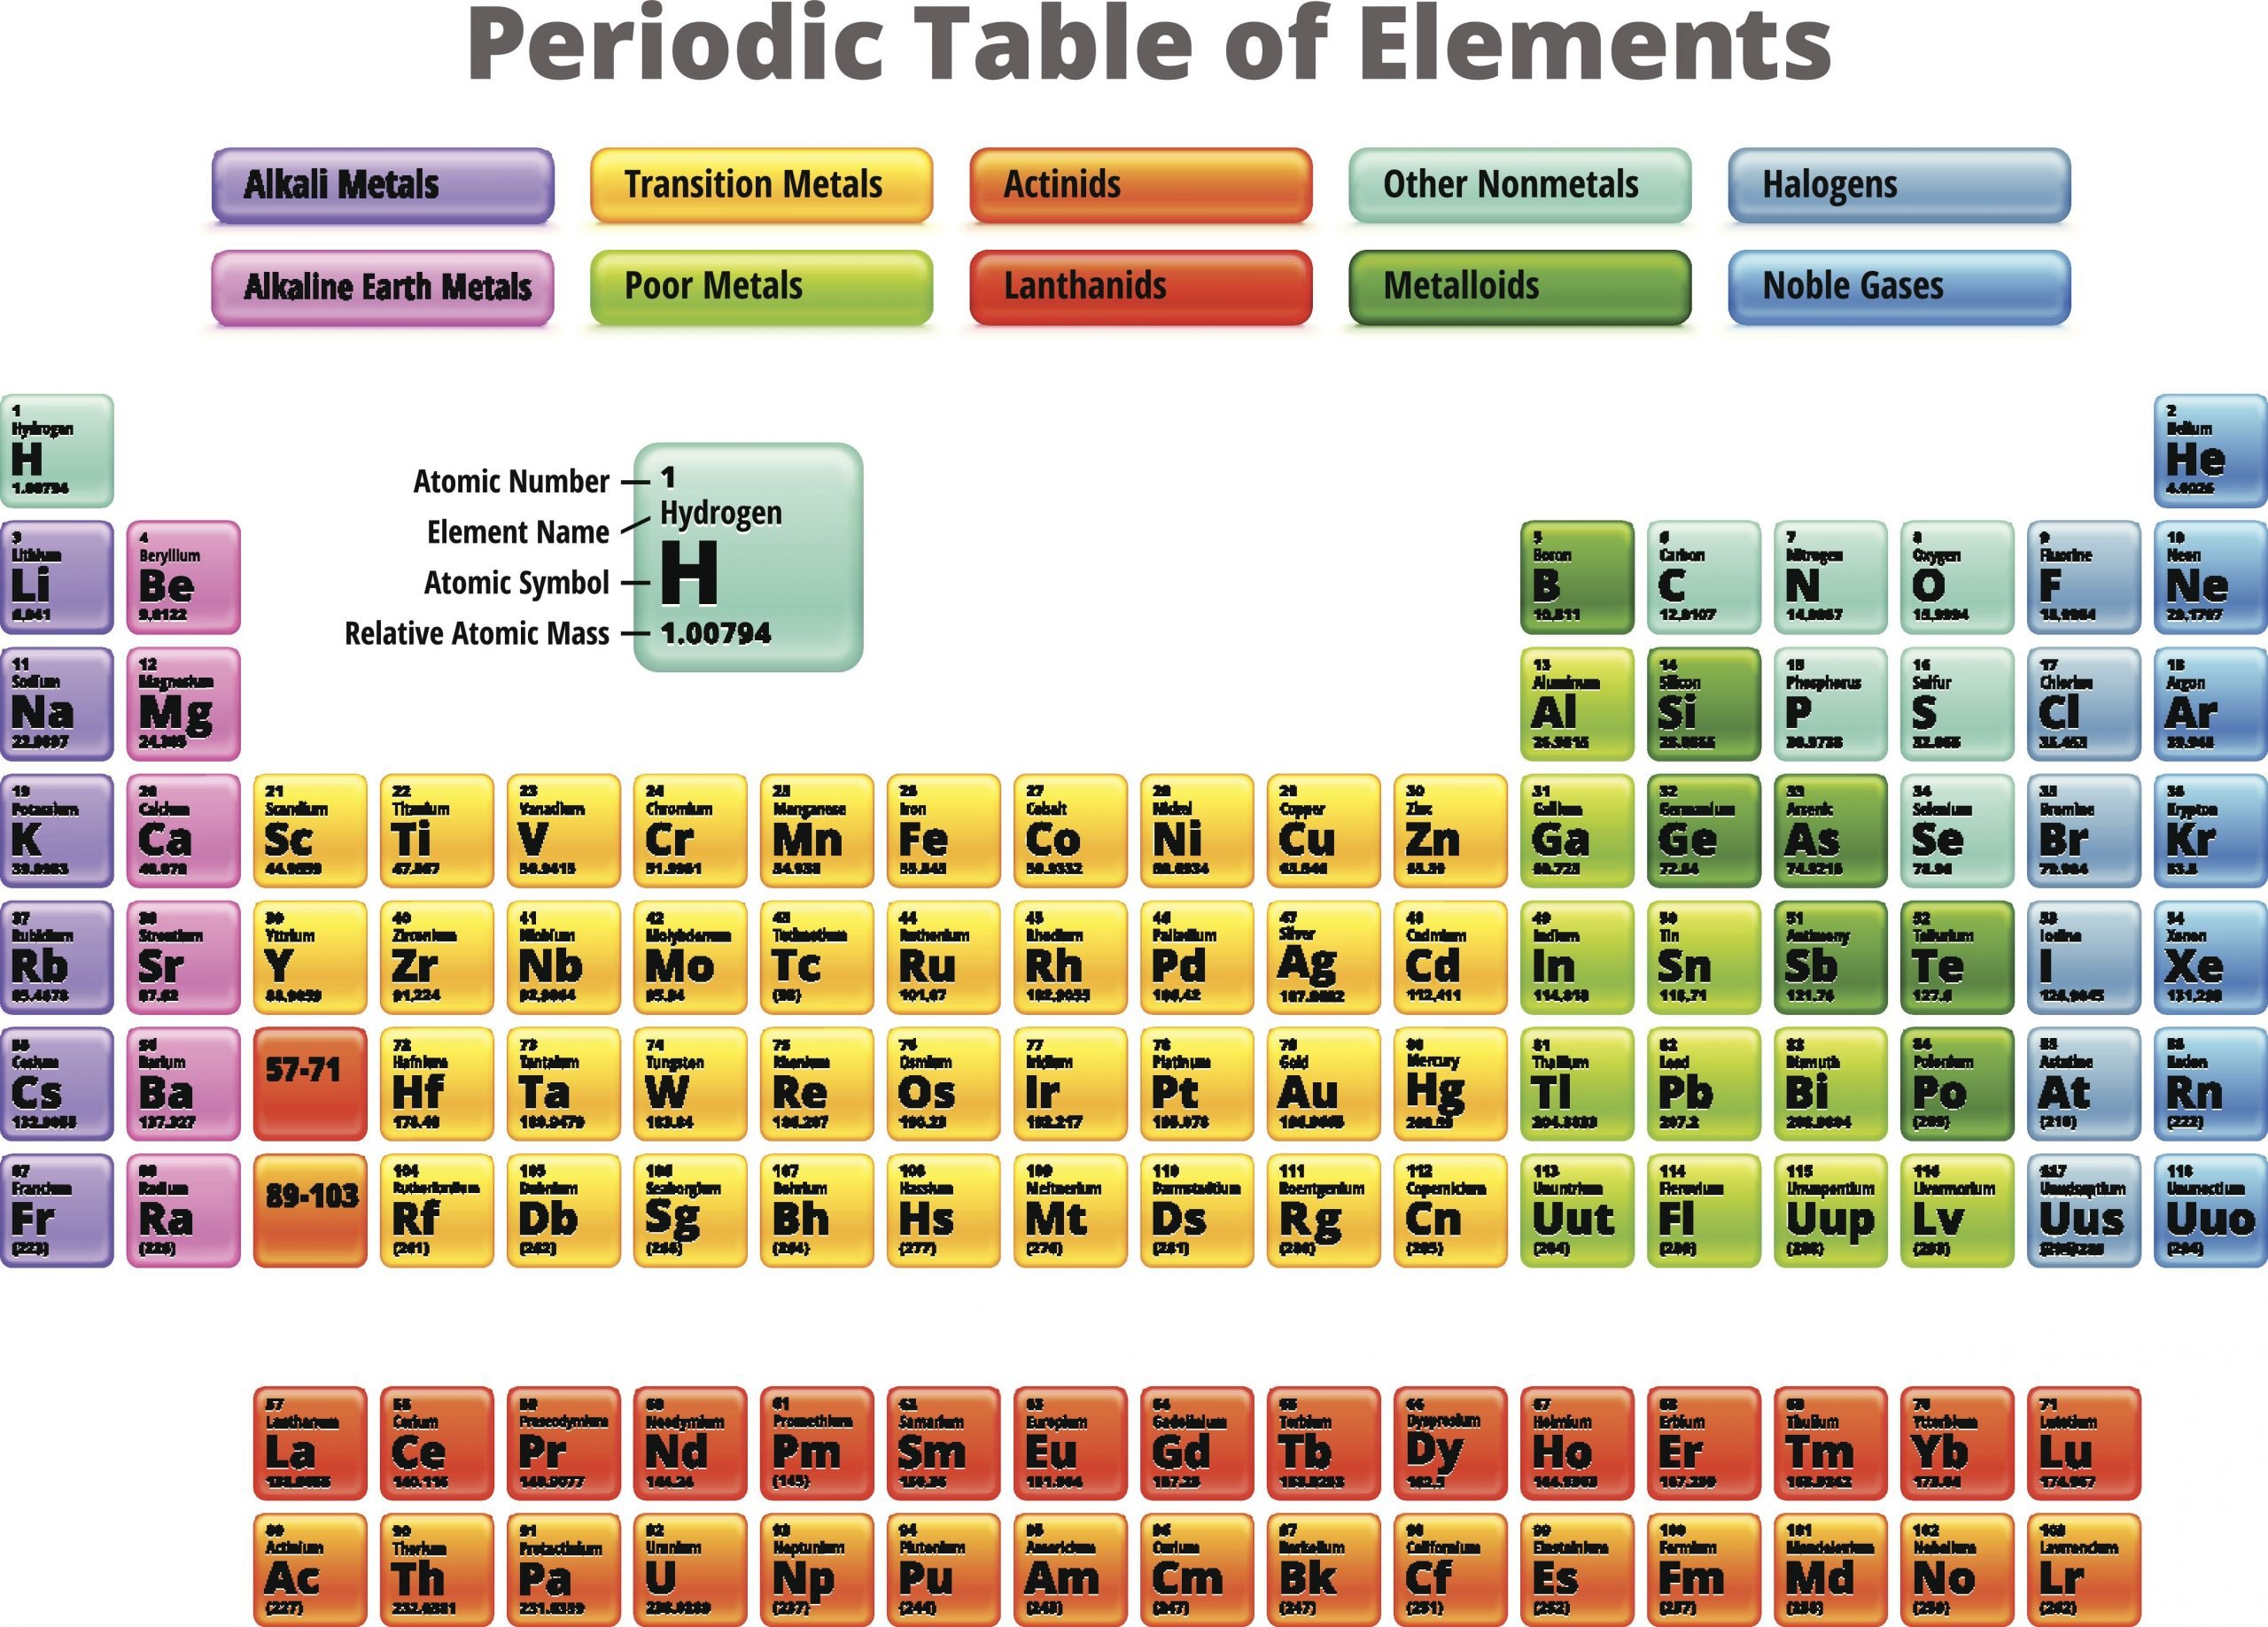 List of Halogens (Element Groups)